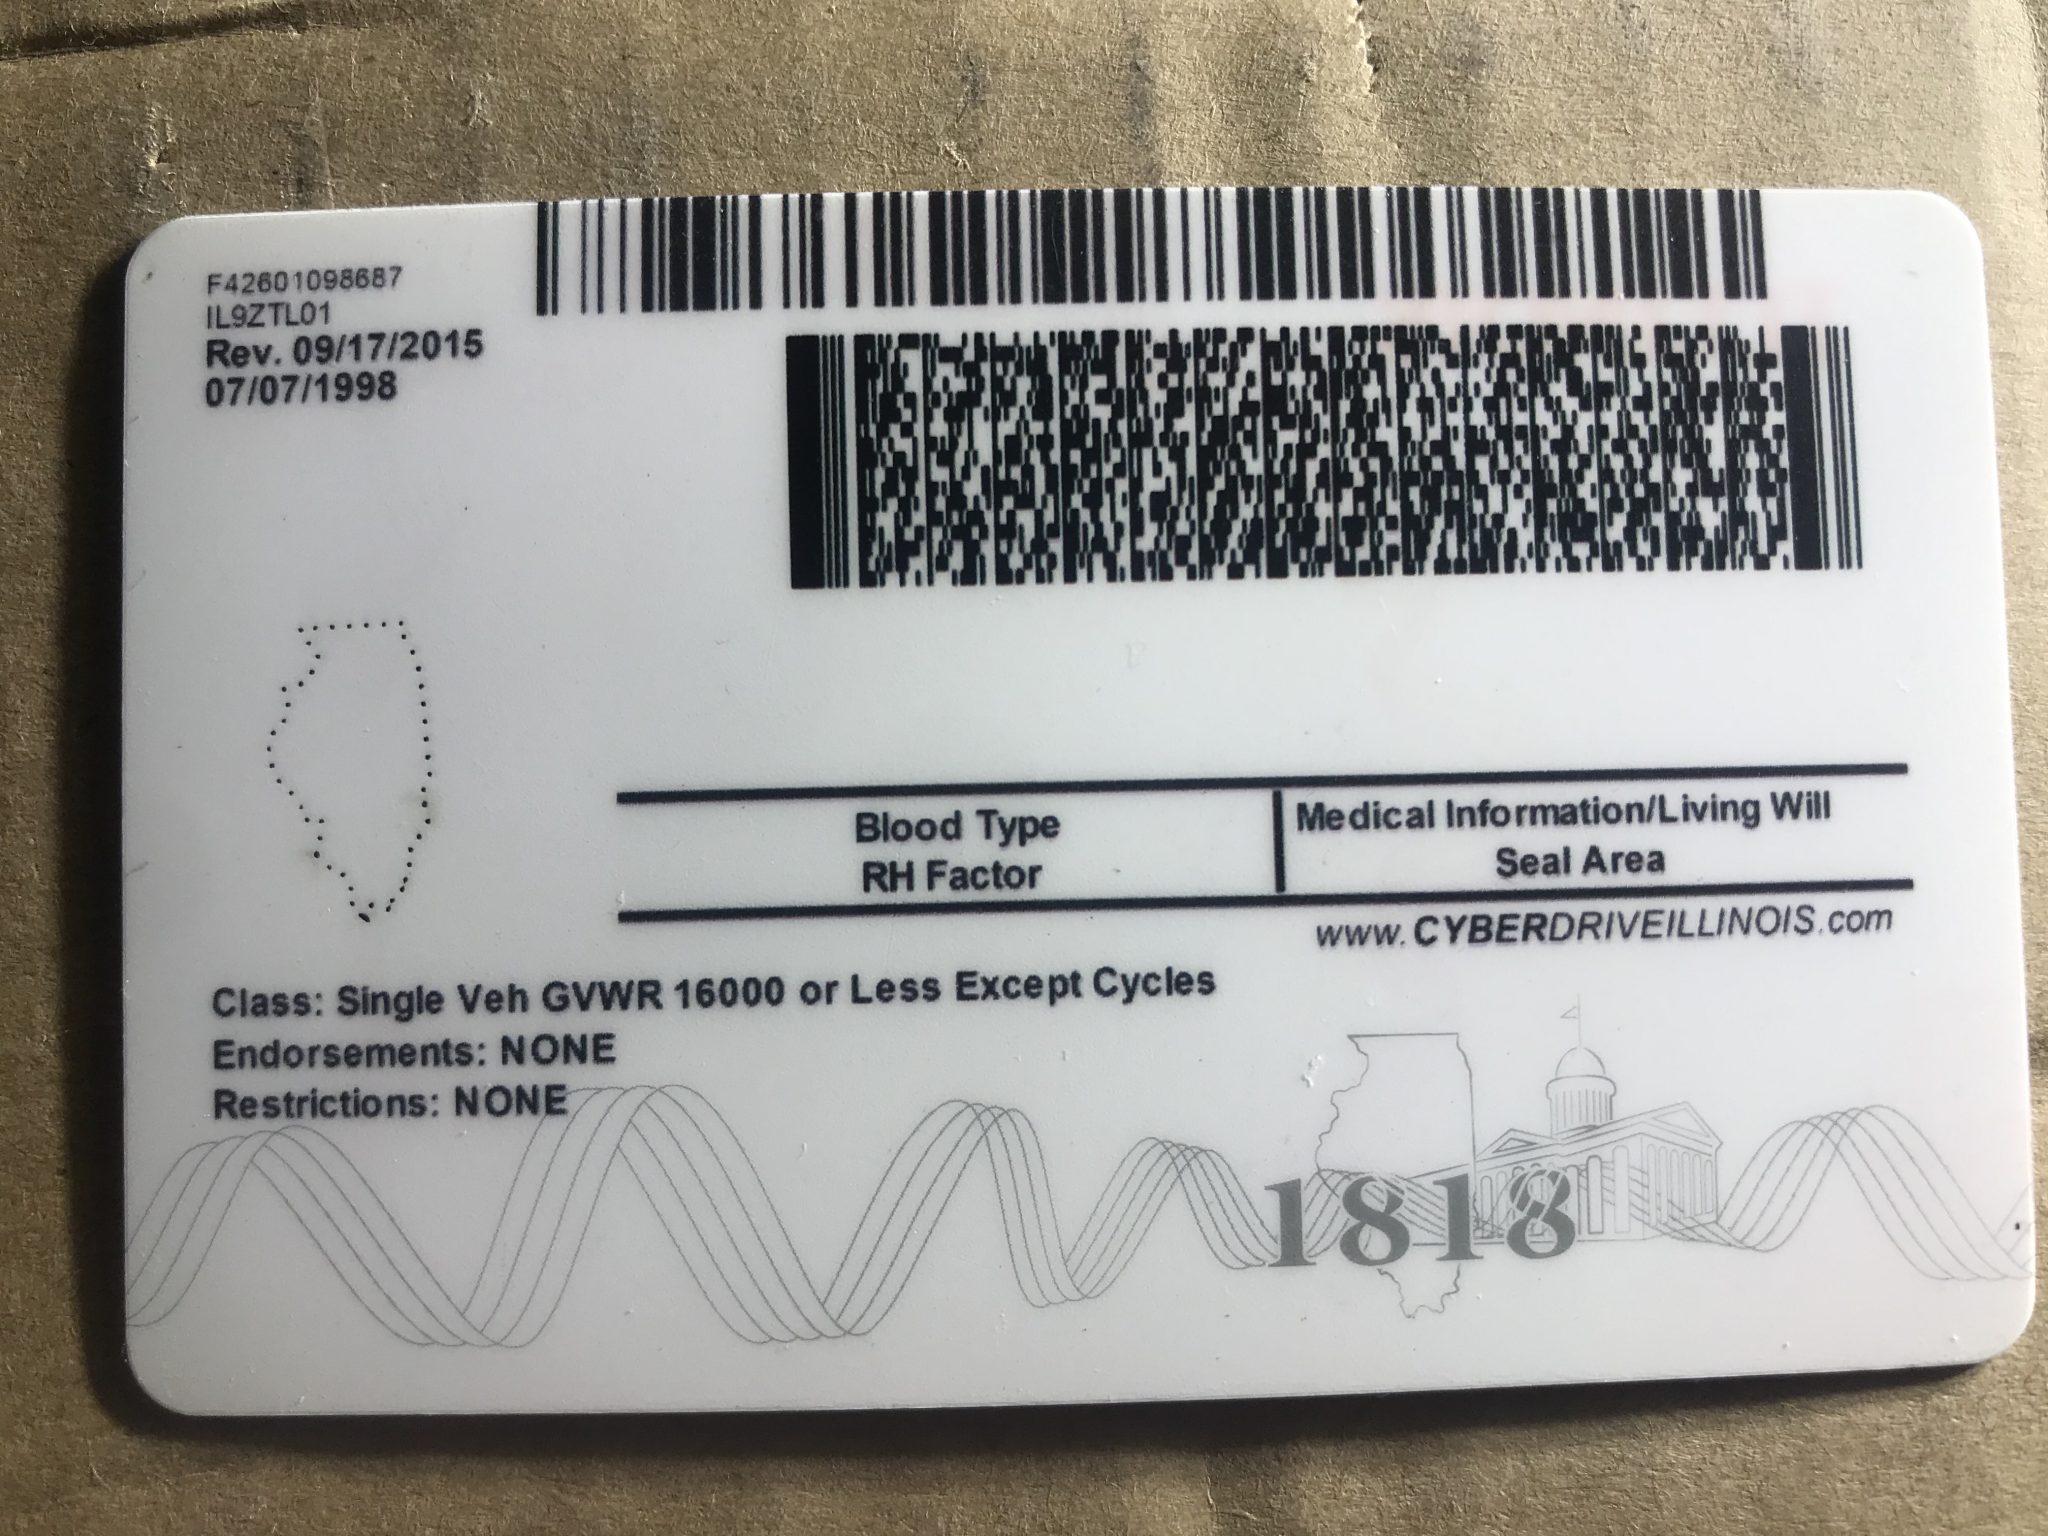 usa id card samples fake national id numbers generator